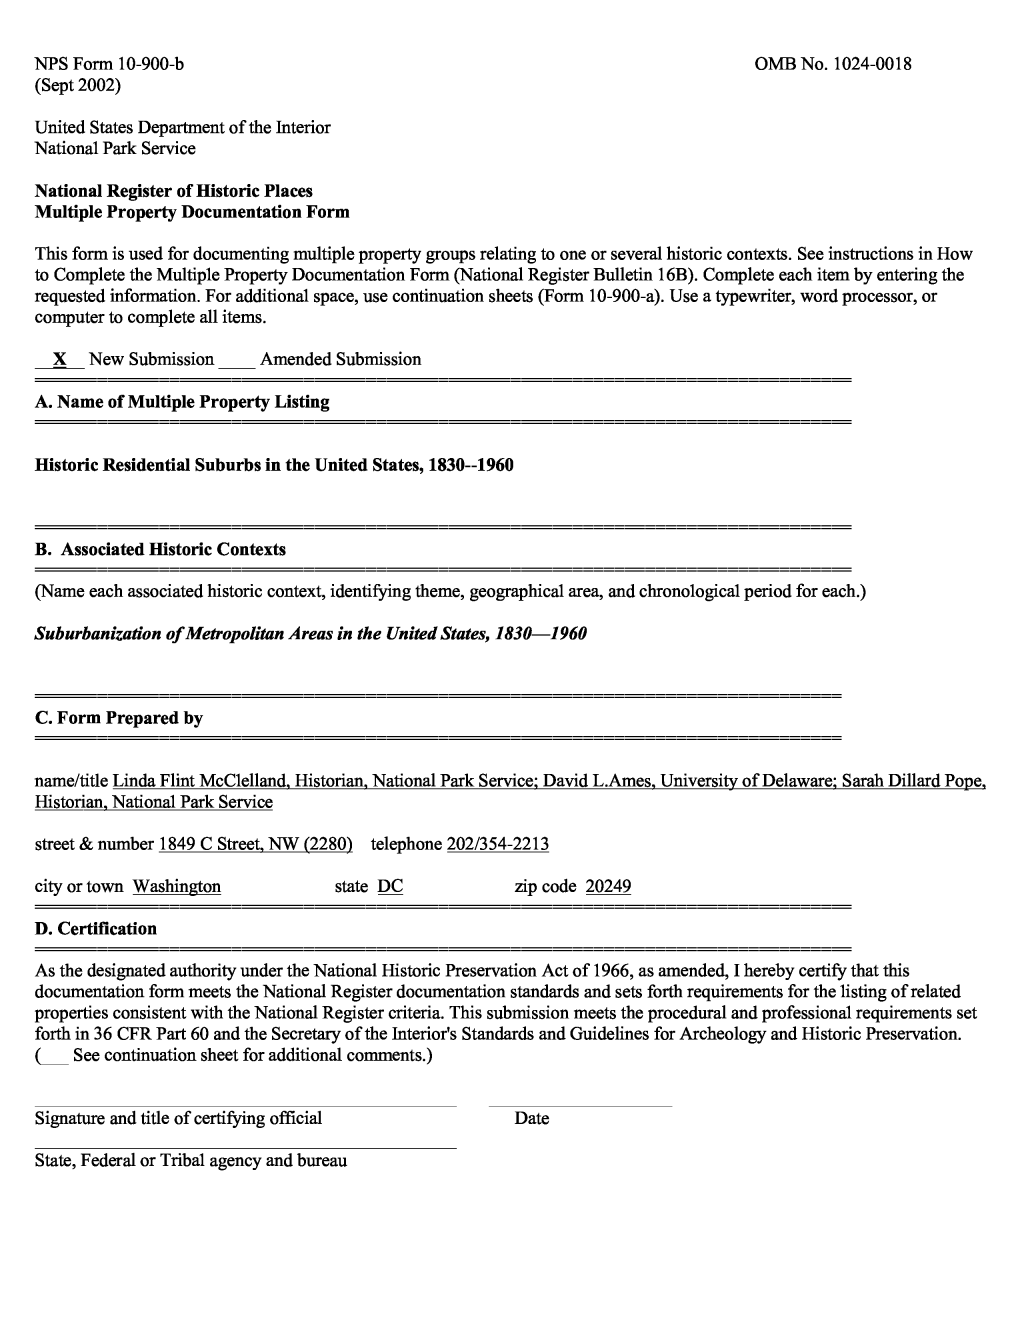 NPS Form 10-900-B OMB No. 1024-0018 (Sept 2002)